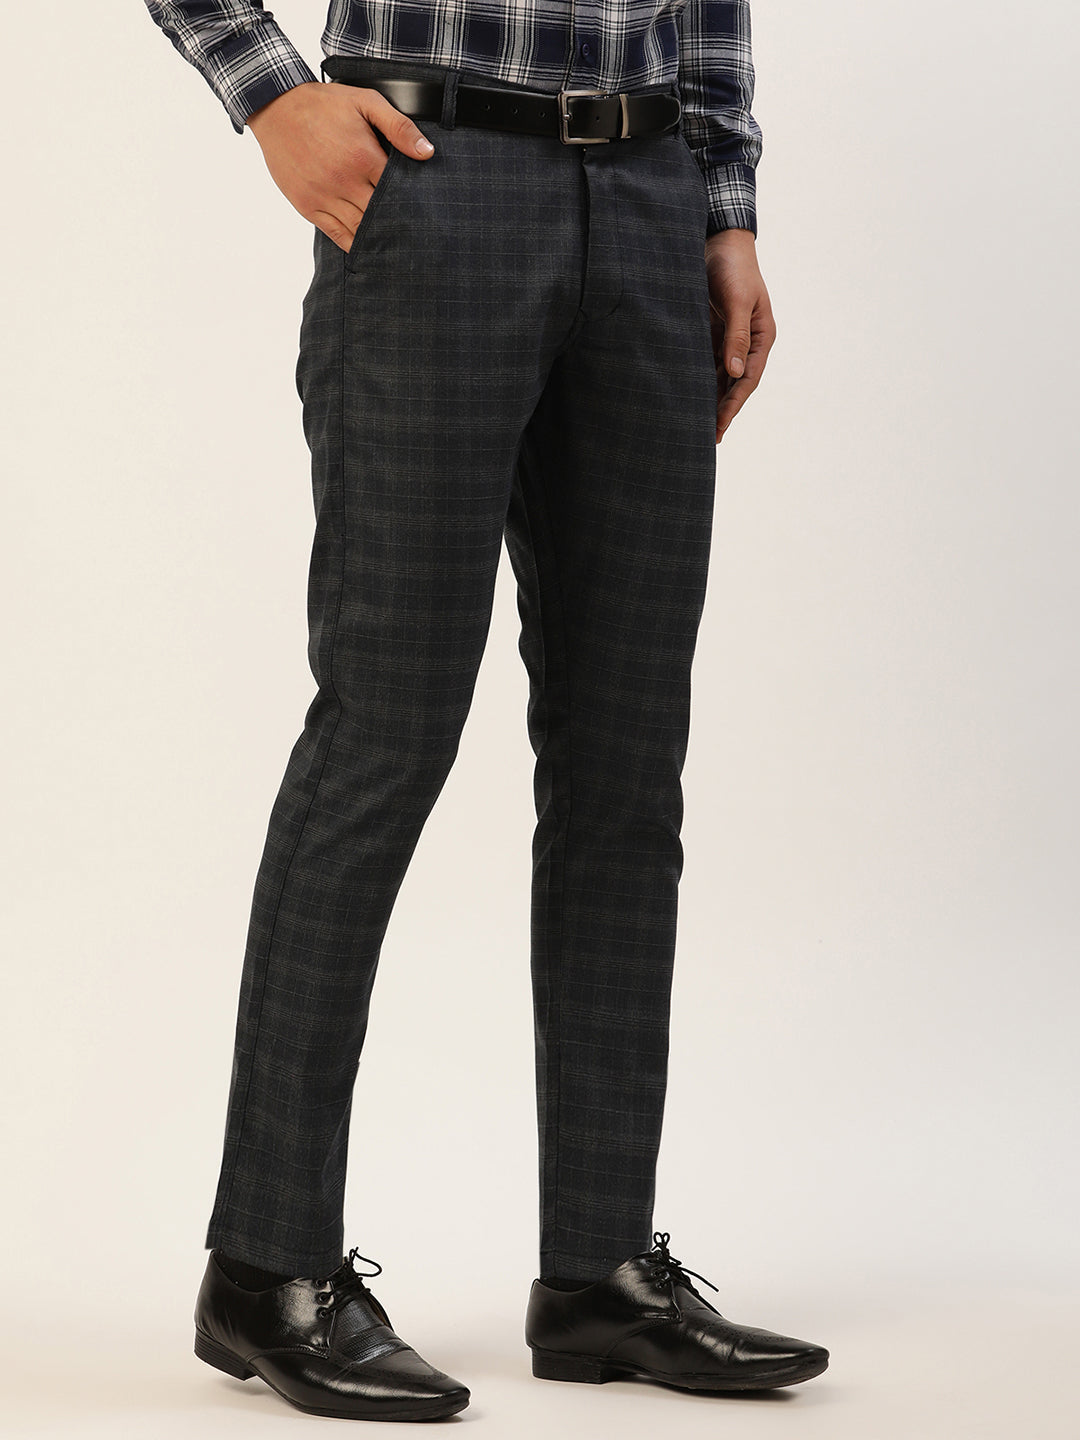 Men's Black Window Checked Formal Trousers ( FGP 272 Black ) - Jainish